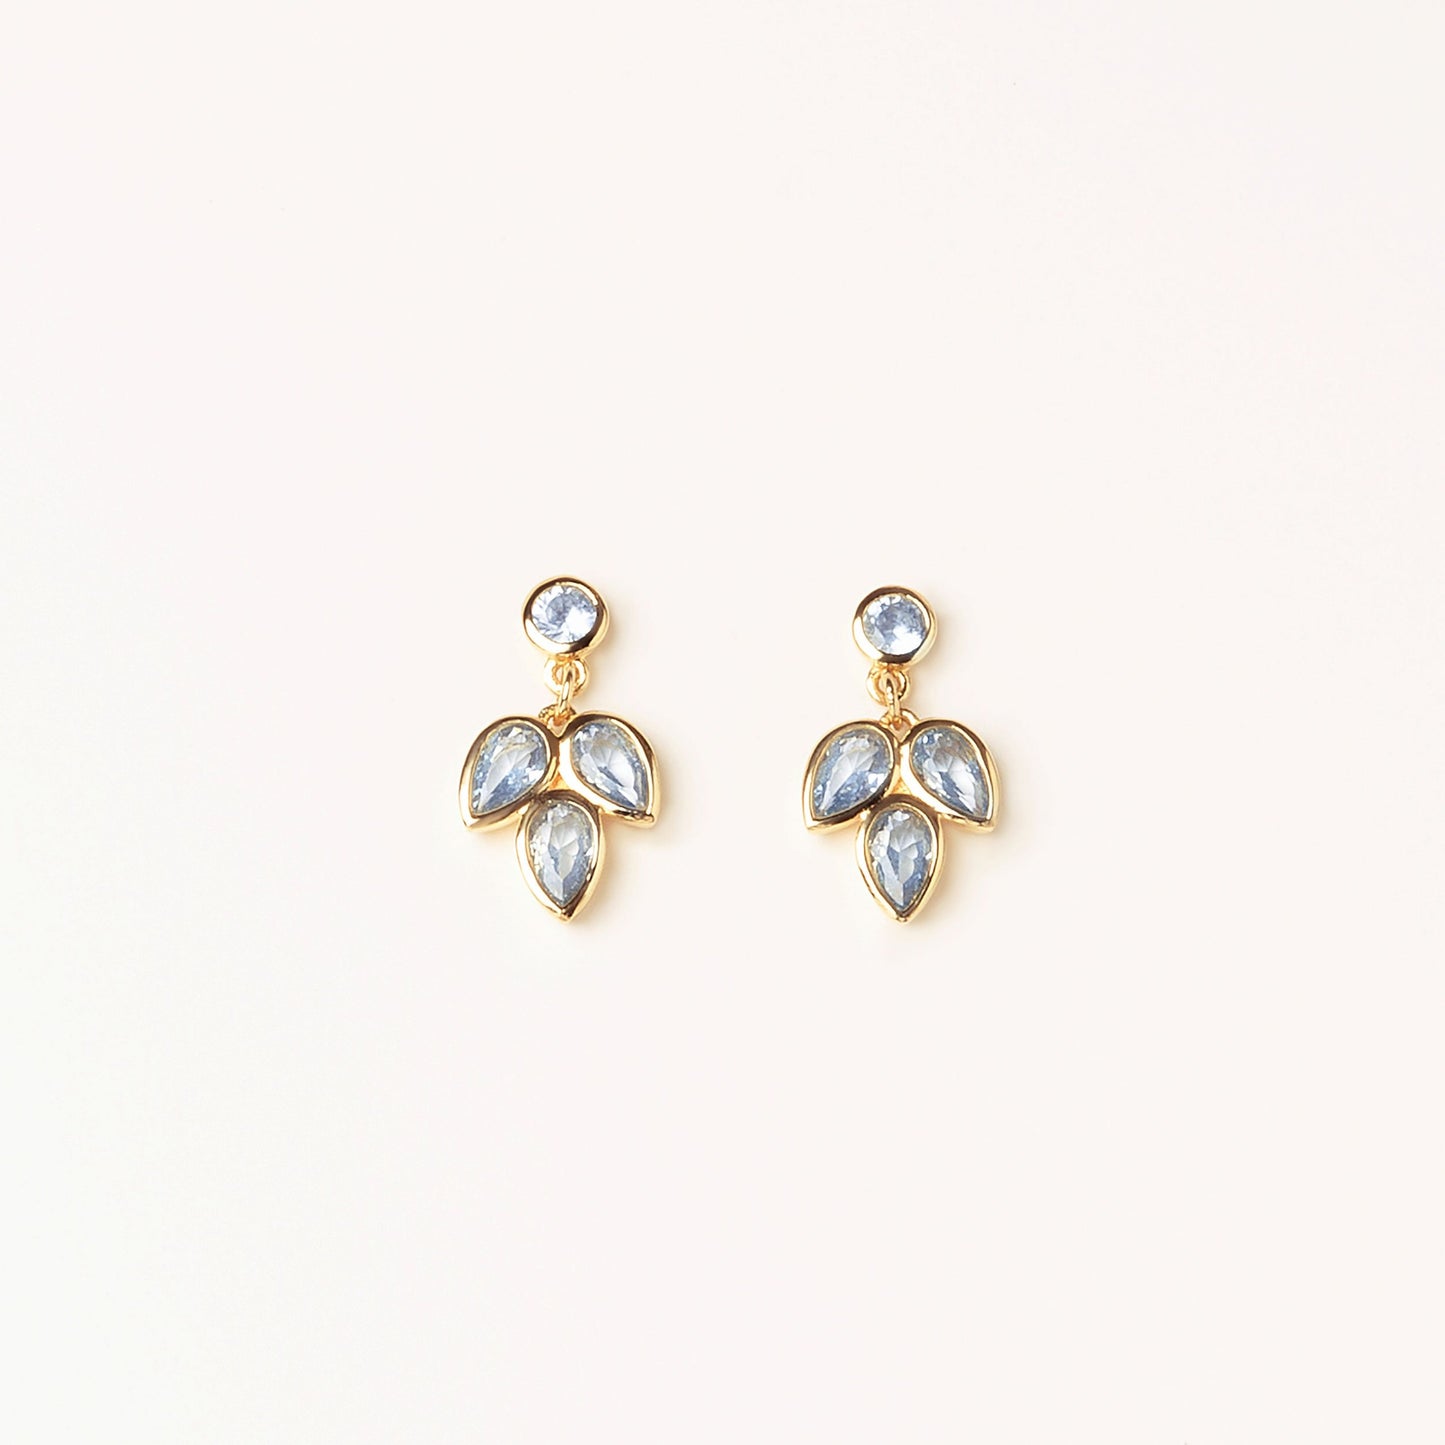 Nilar earrings - gold plated